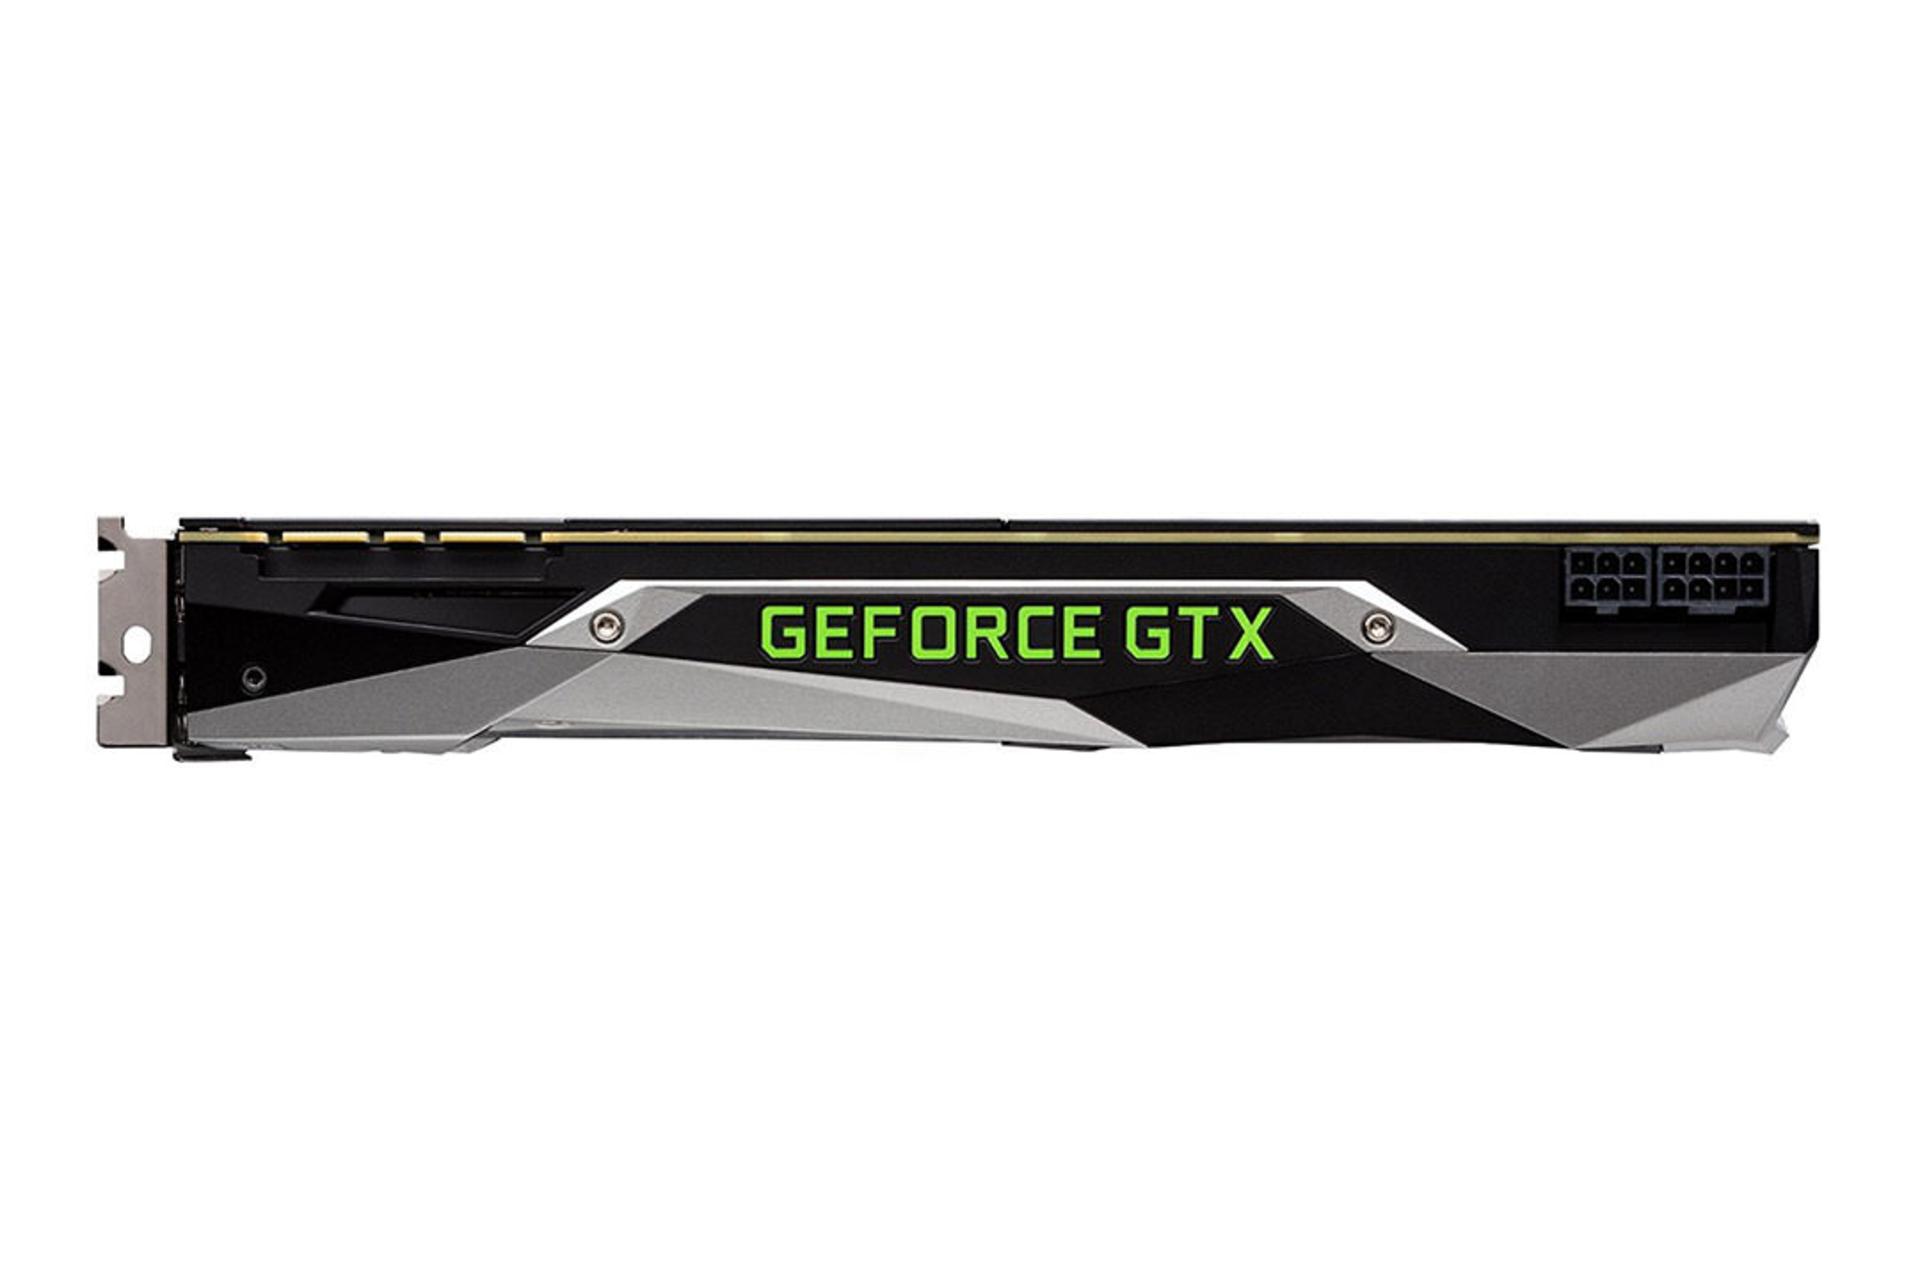 Nvidia GEFORCE GTX 1080 Ti